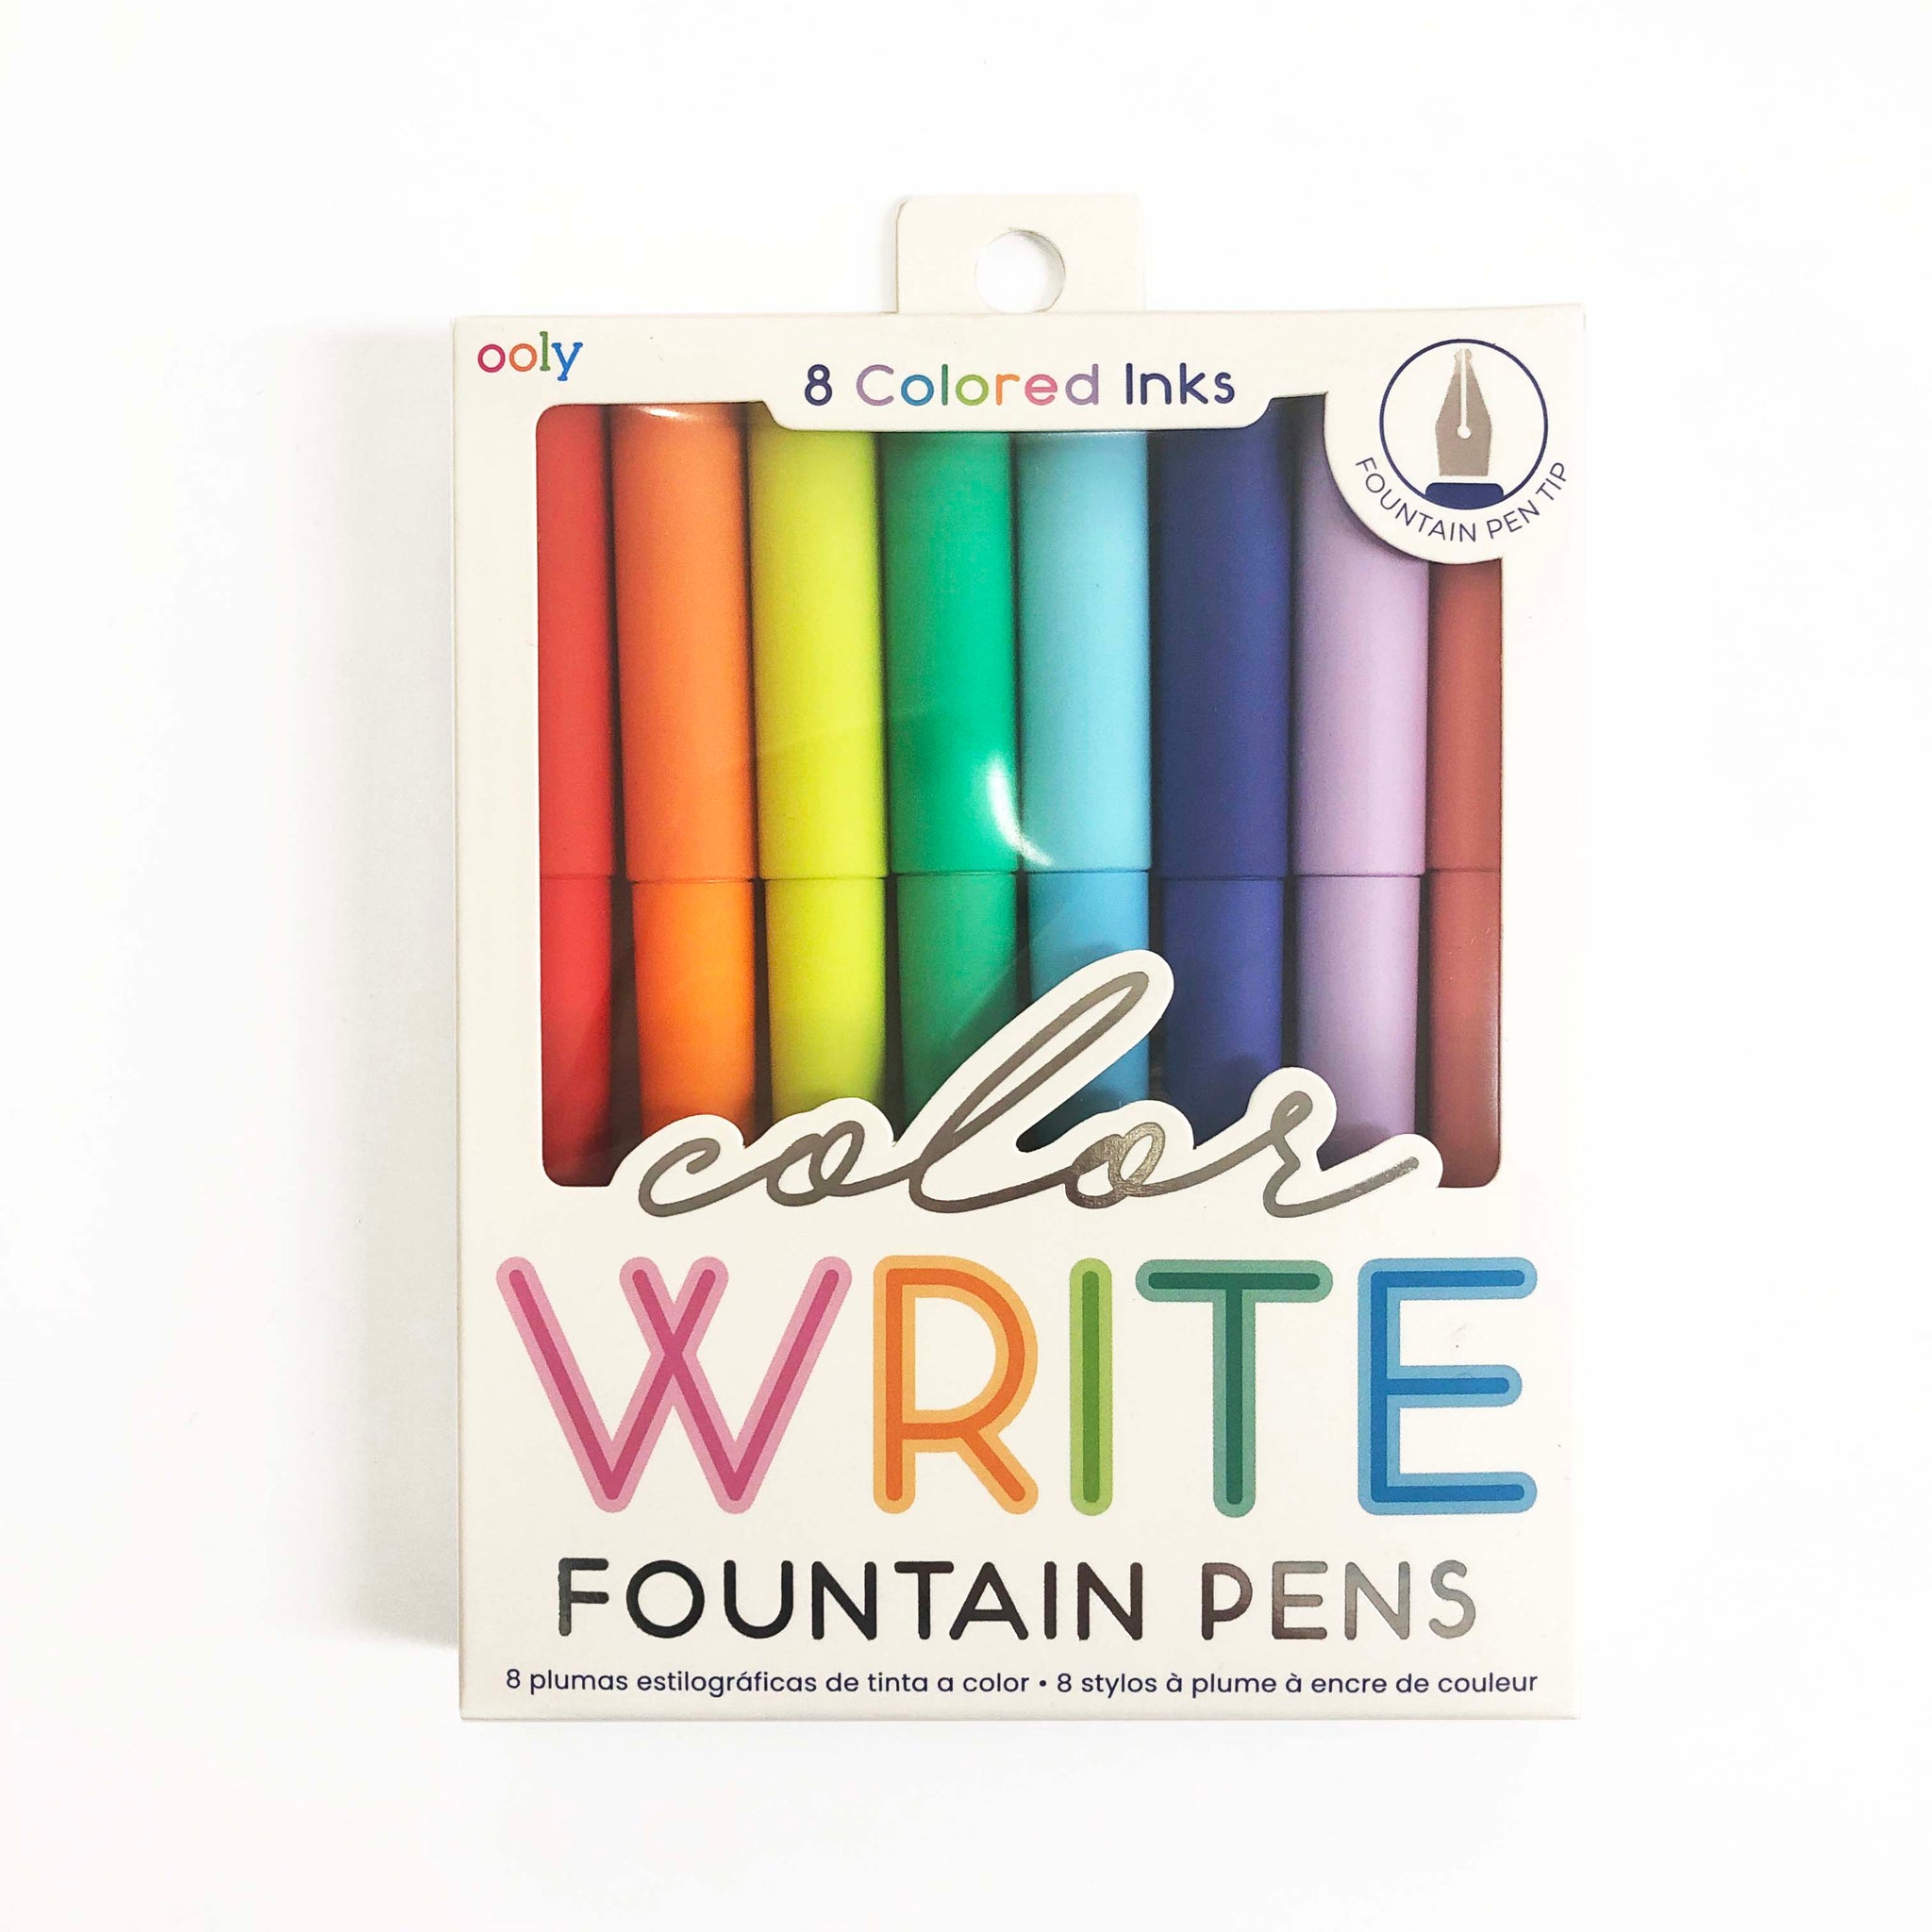 20% OFF Erasable Colored Pencils - 12 pk - The Imagination Spot